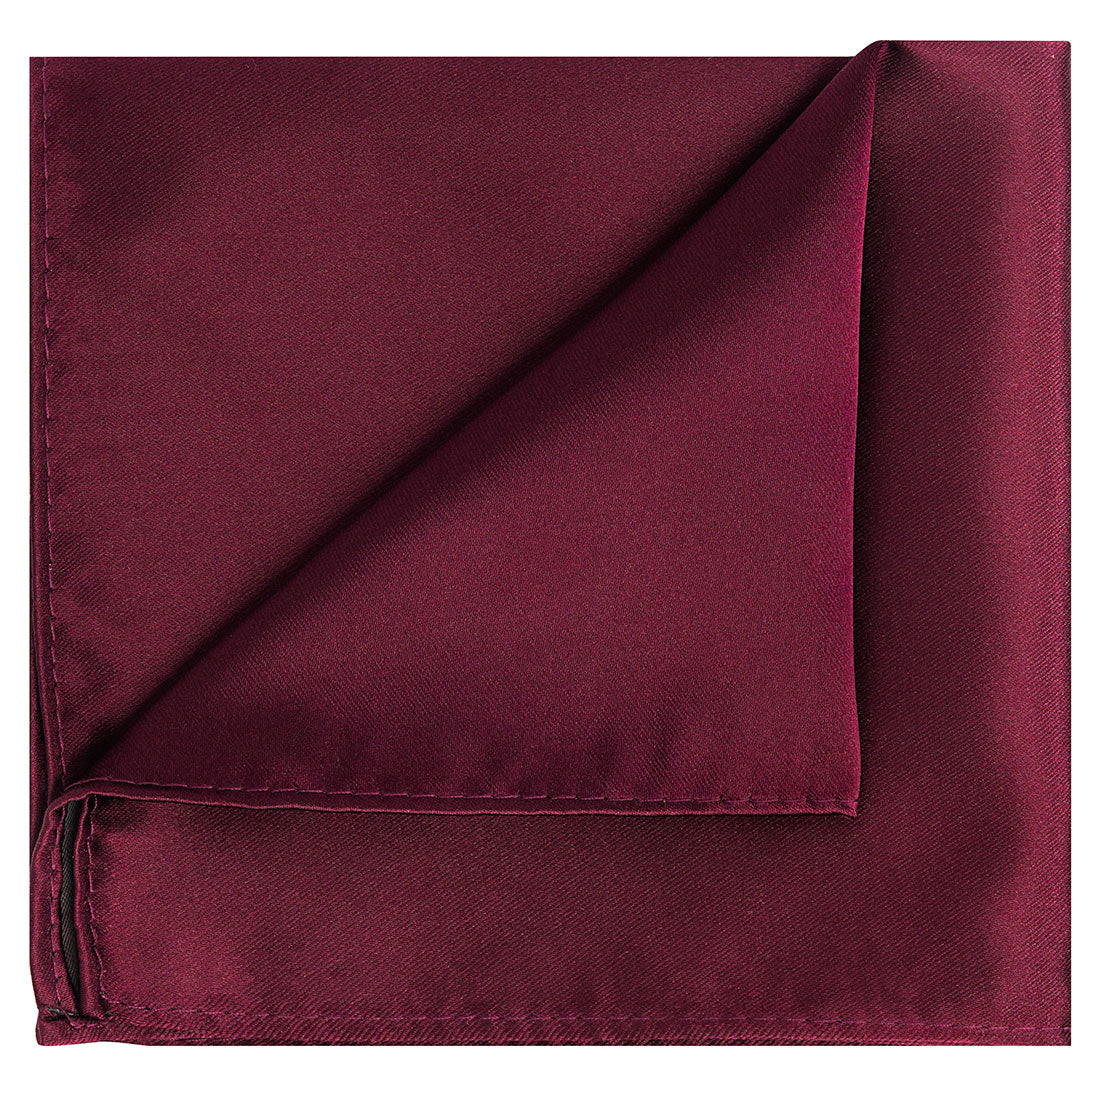 Burgundy Satin Pocket Square - Tie, bowtie, pocket square  | Kissties